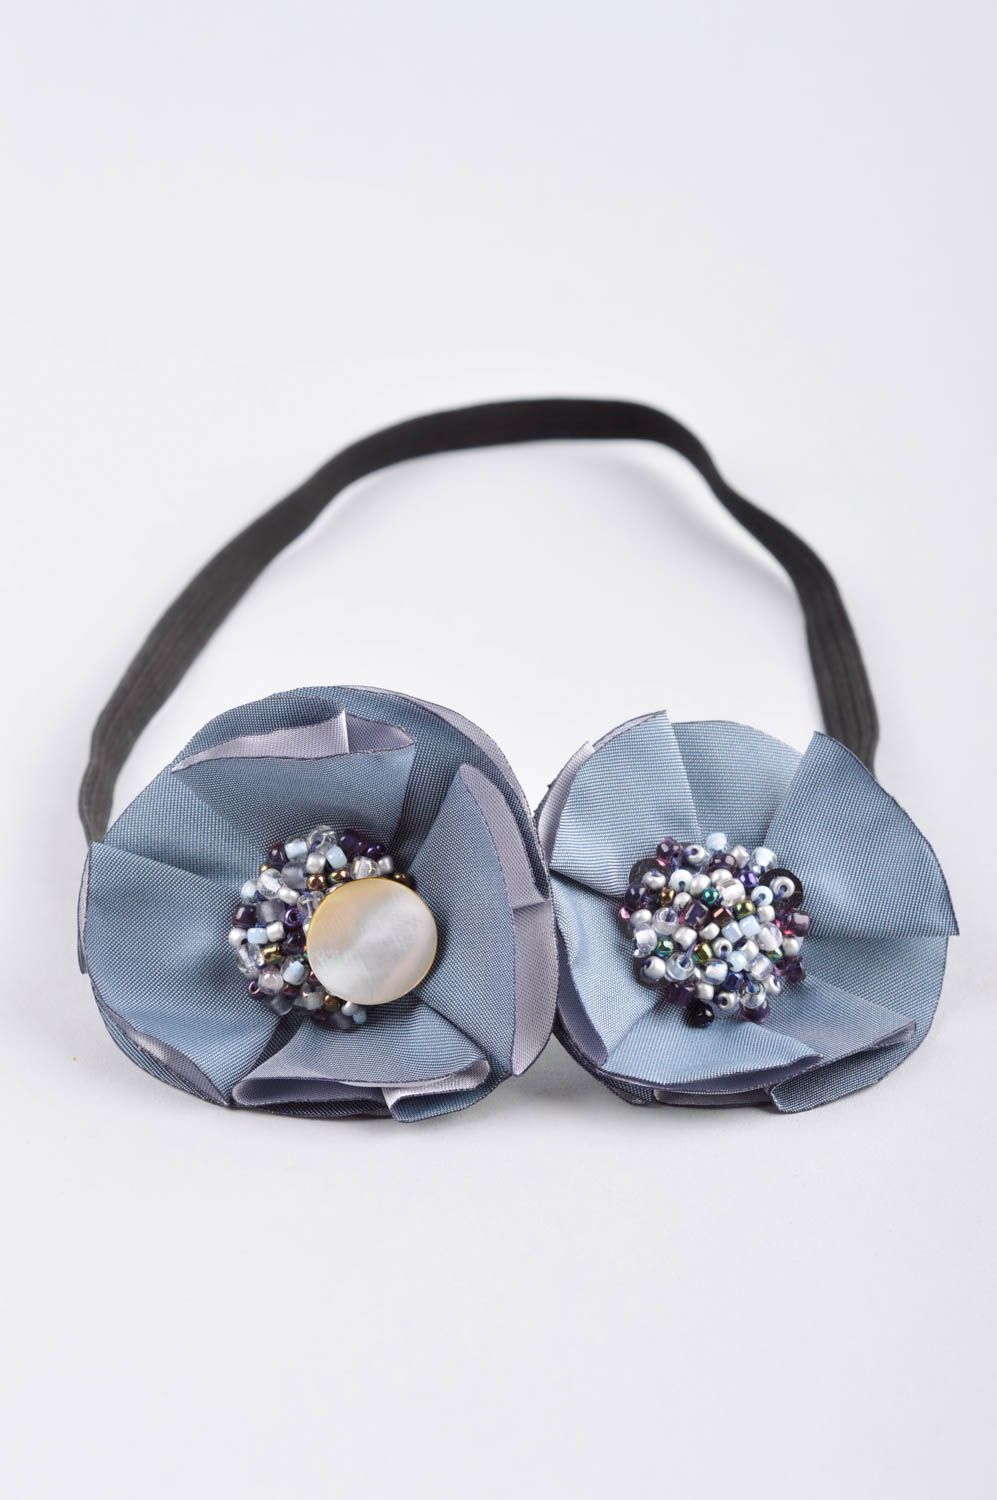 Handmade hair accessories designer headband flowers for hair gifts for girls photo 3